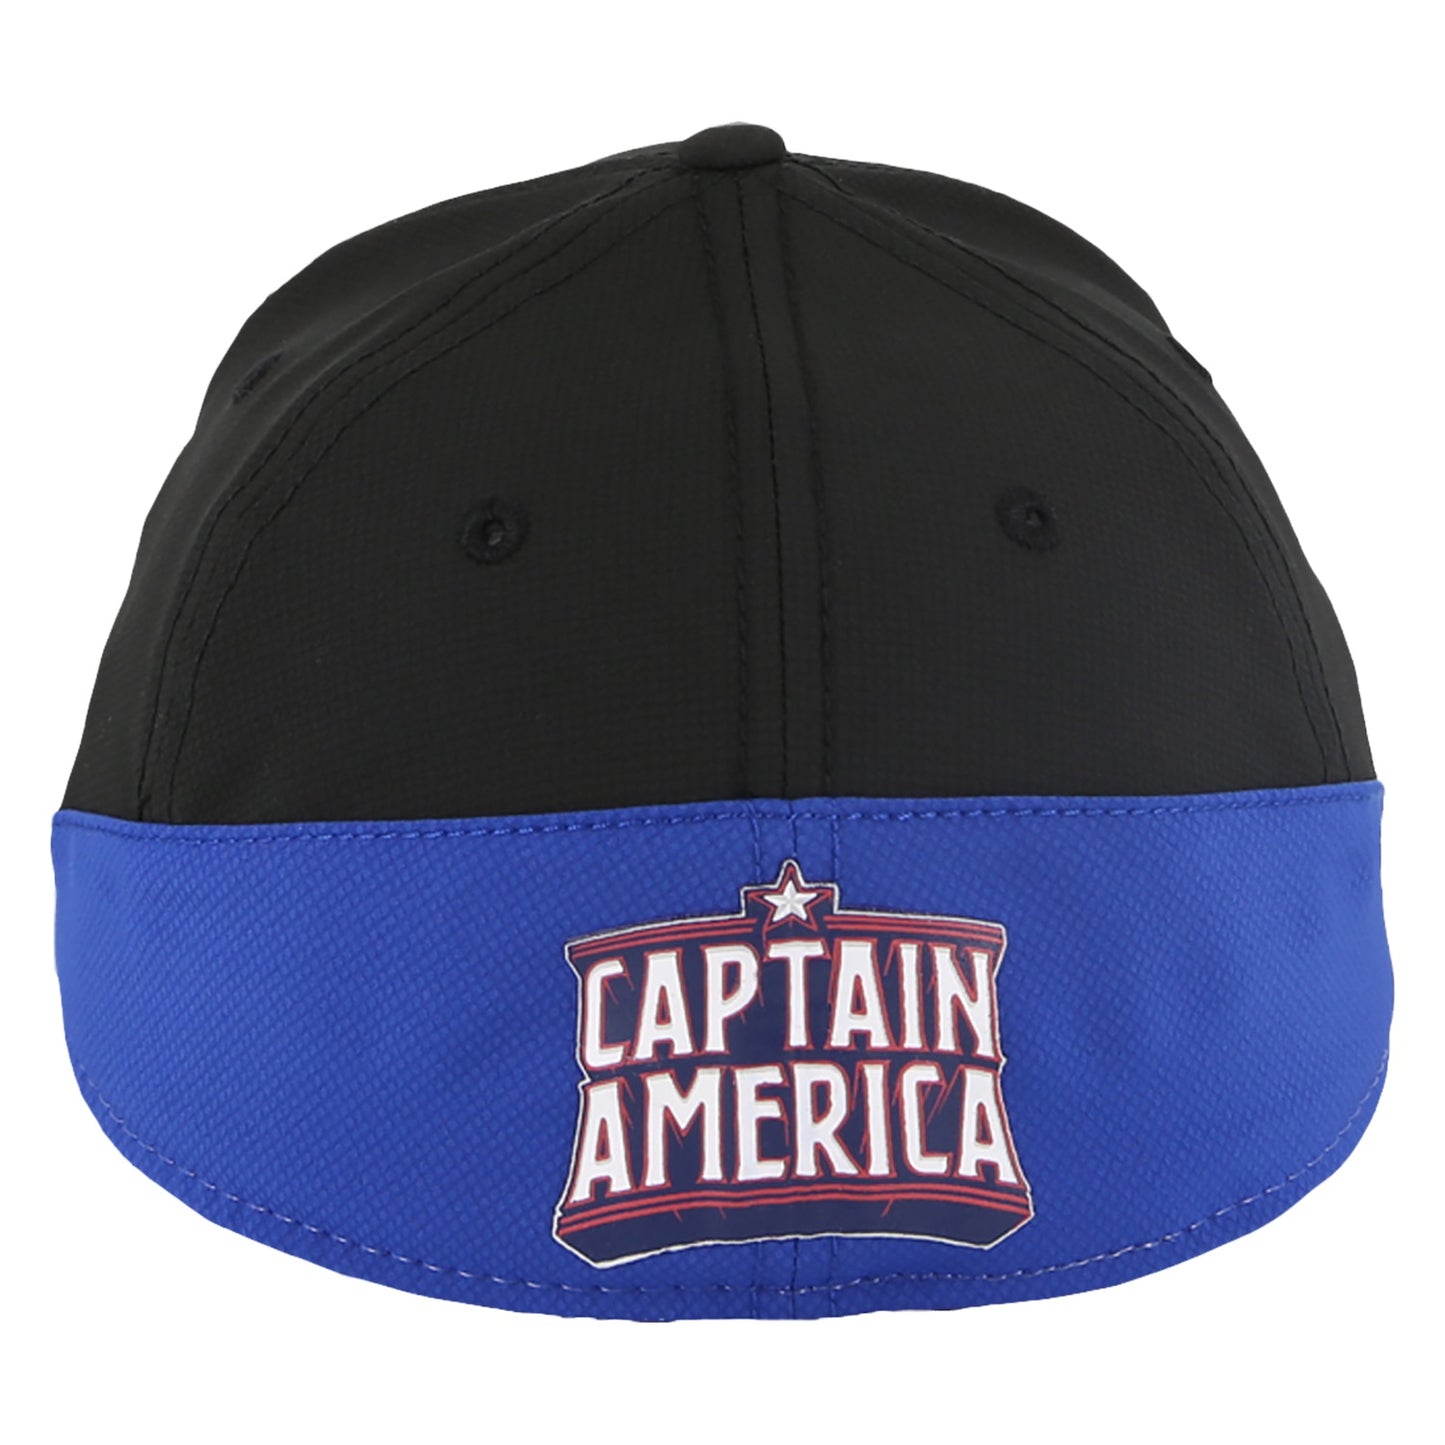 Black Captain America Baseball Cap